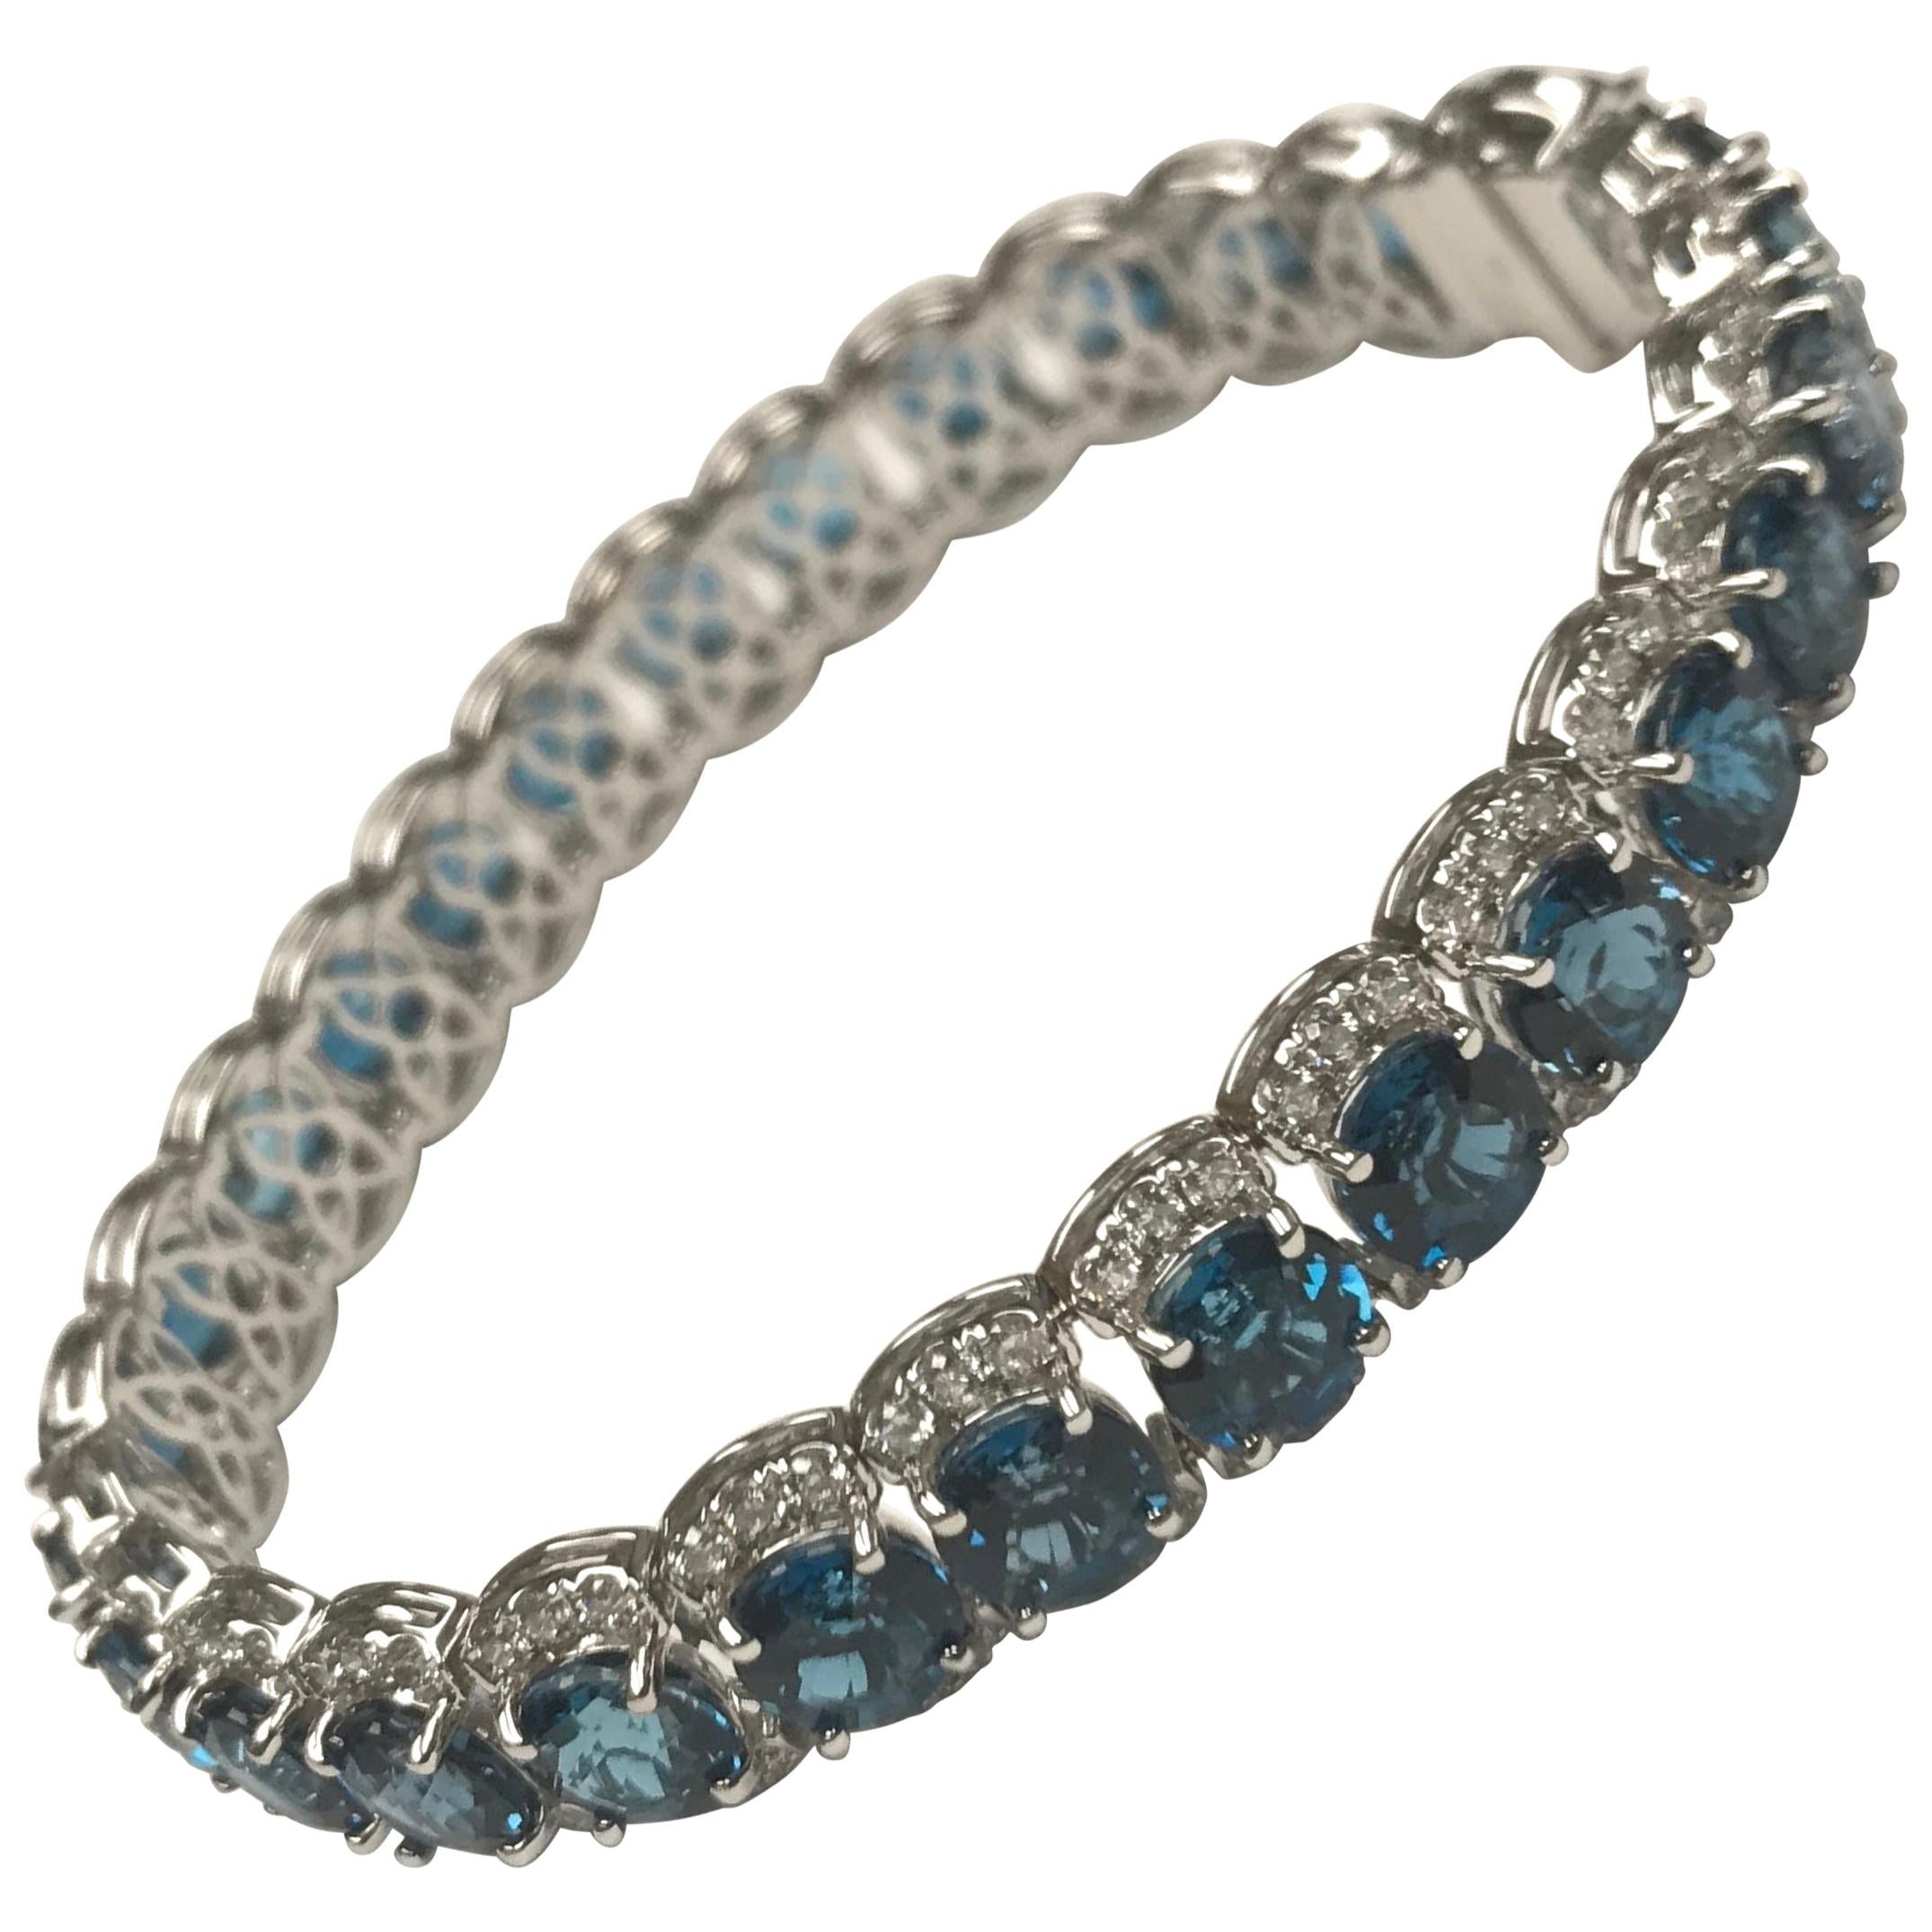 This bracelet features 28 Step Cut Blue Topaz between 3.10 carats round white diamonds.
The bracelet measures 7